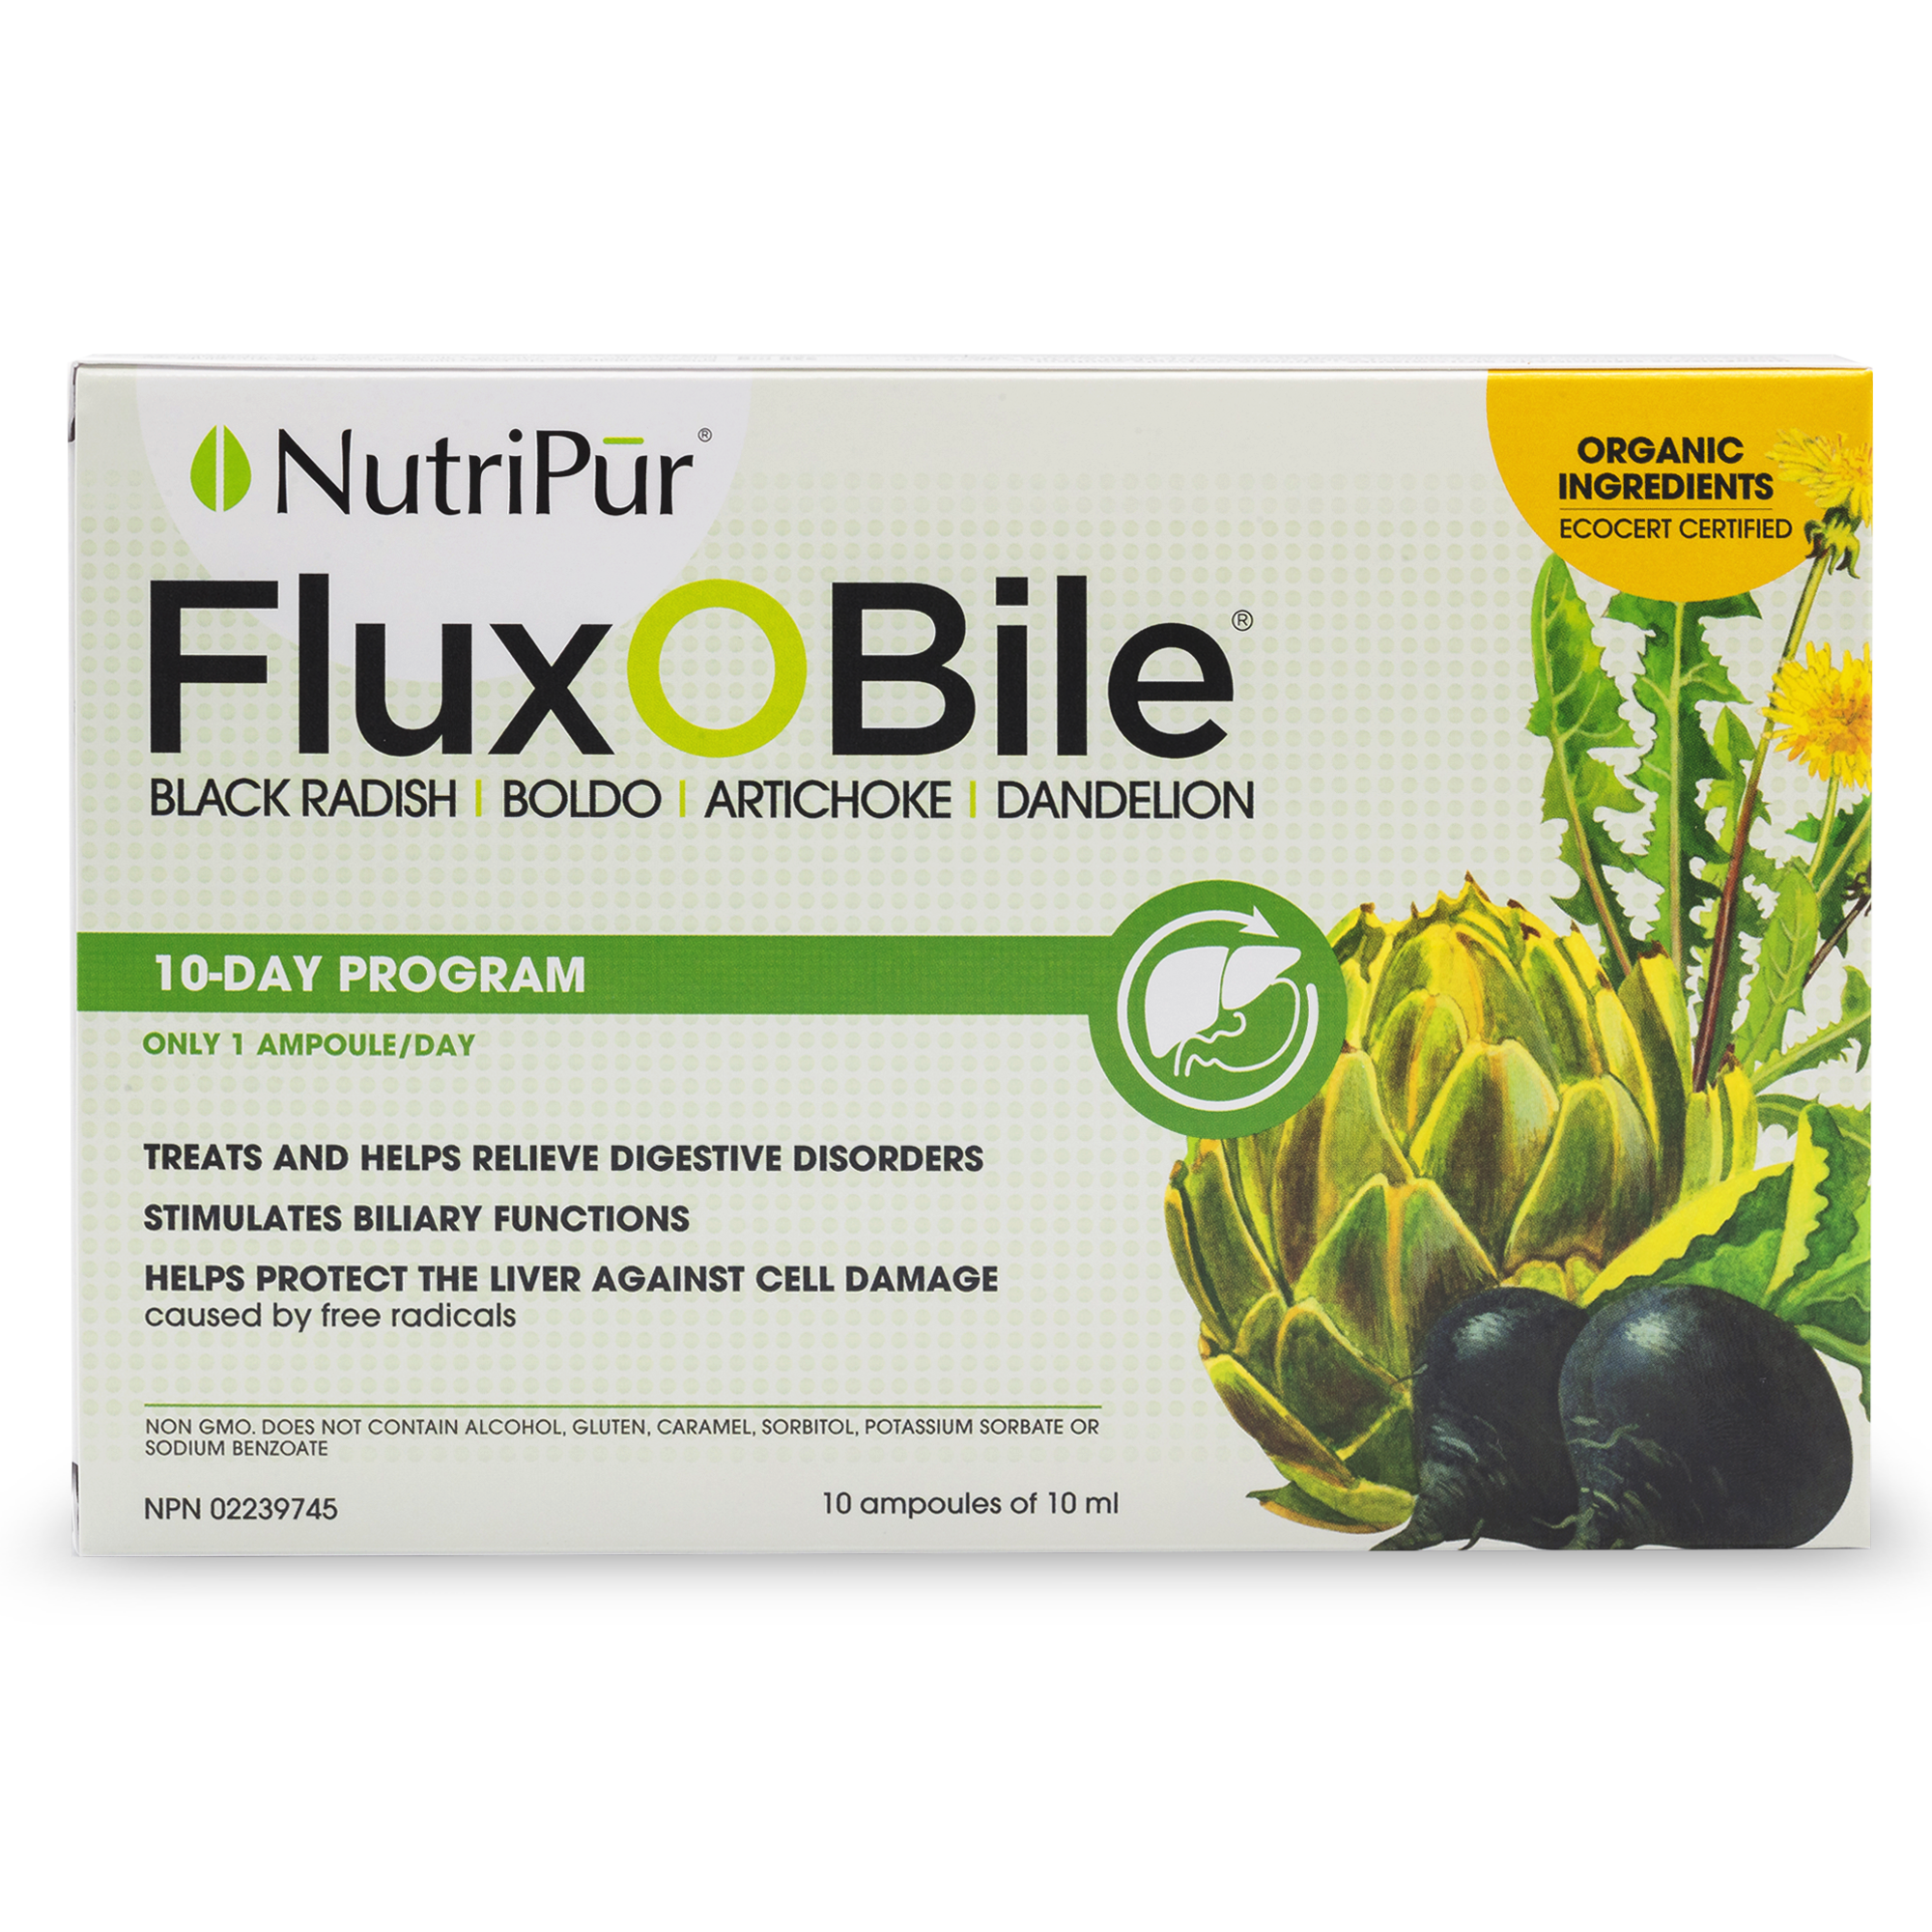 Fluxobile - Nutripur - Body clean - liver detox - 100% organic - water extraction